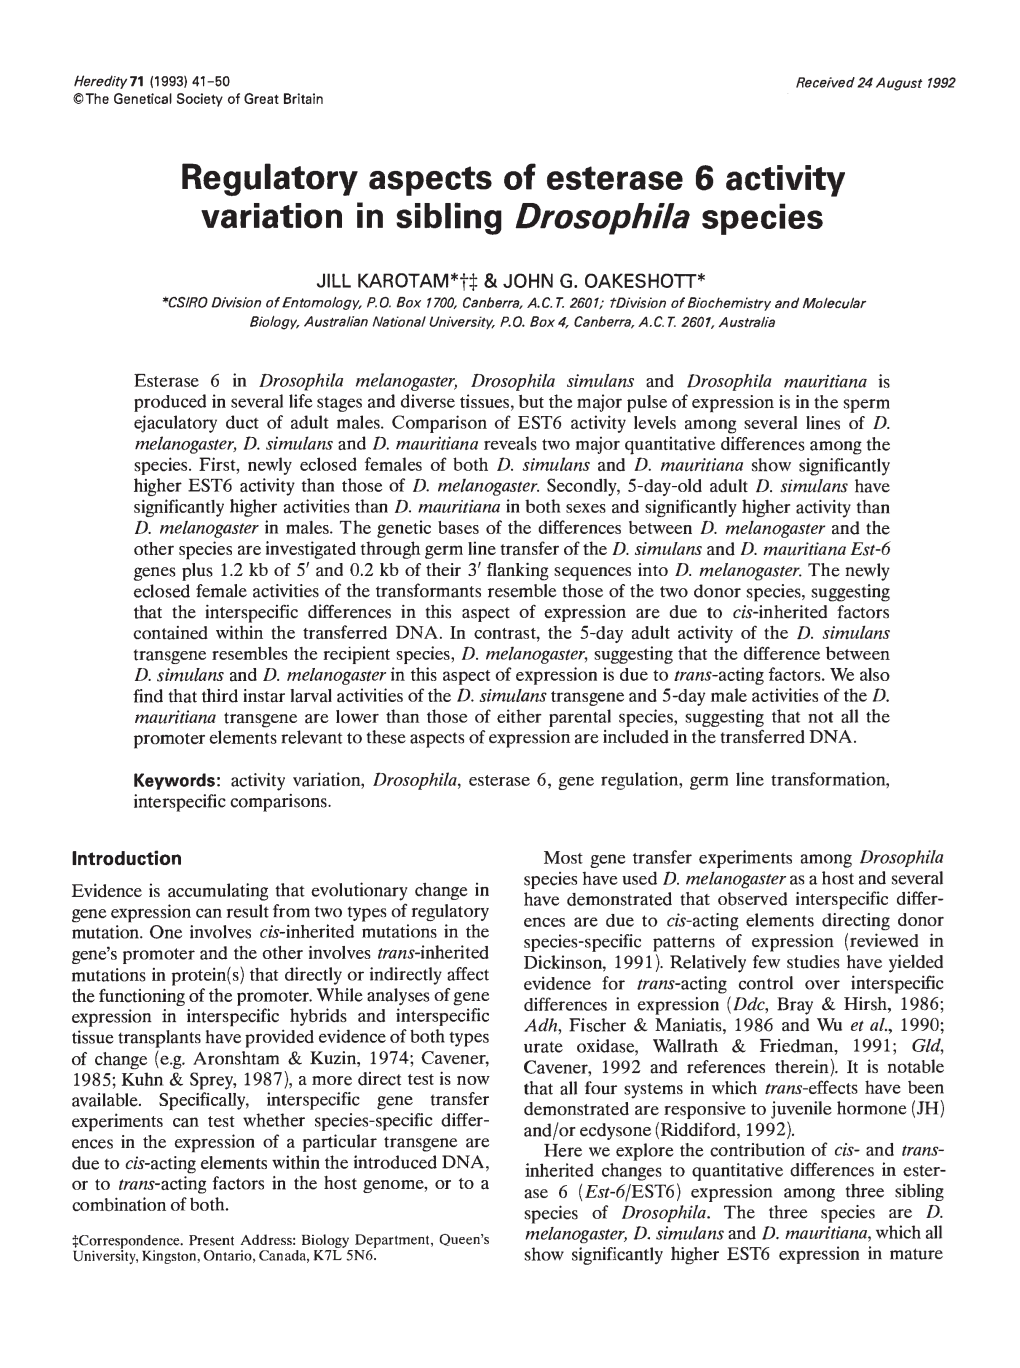 Regulatory Aspects of Esterase 6 Activity Variation in Sibling Drosophila Species